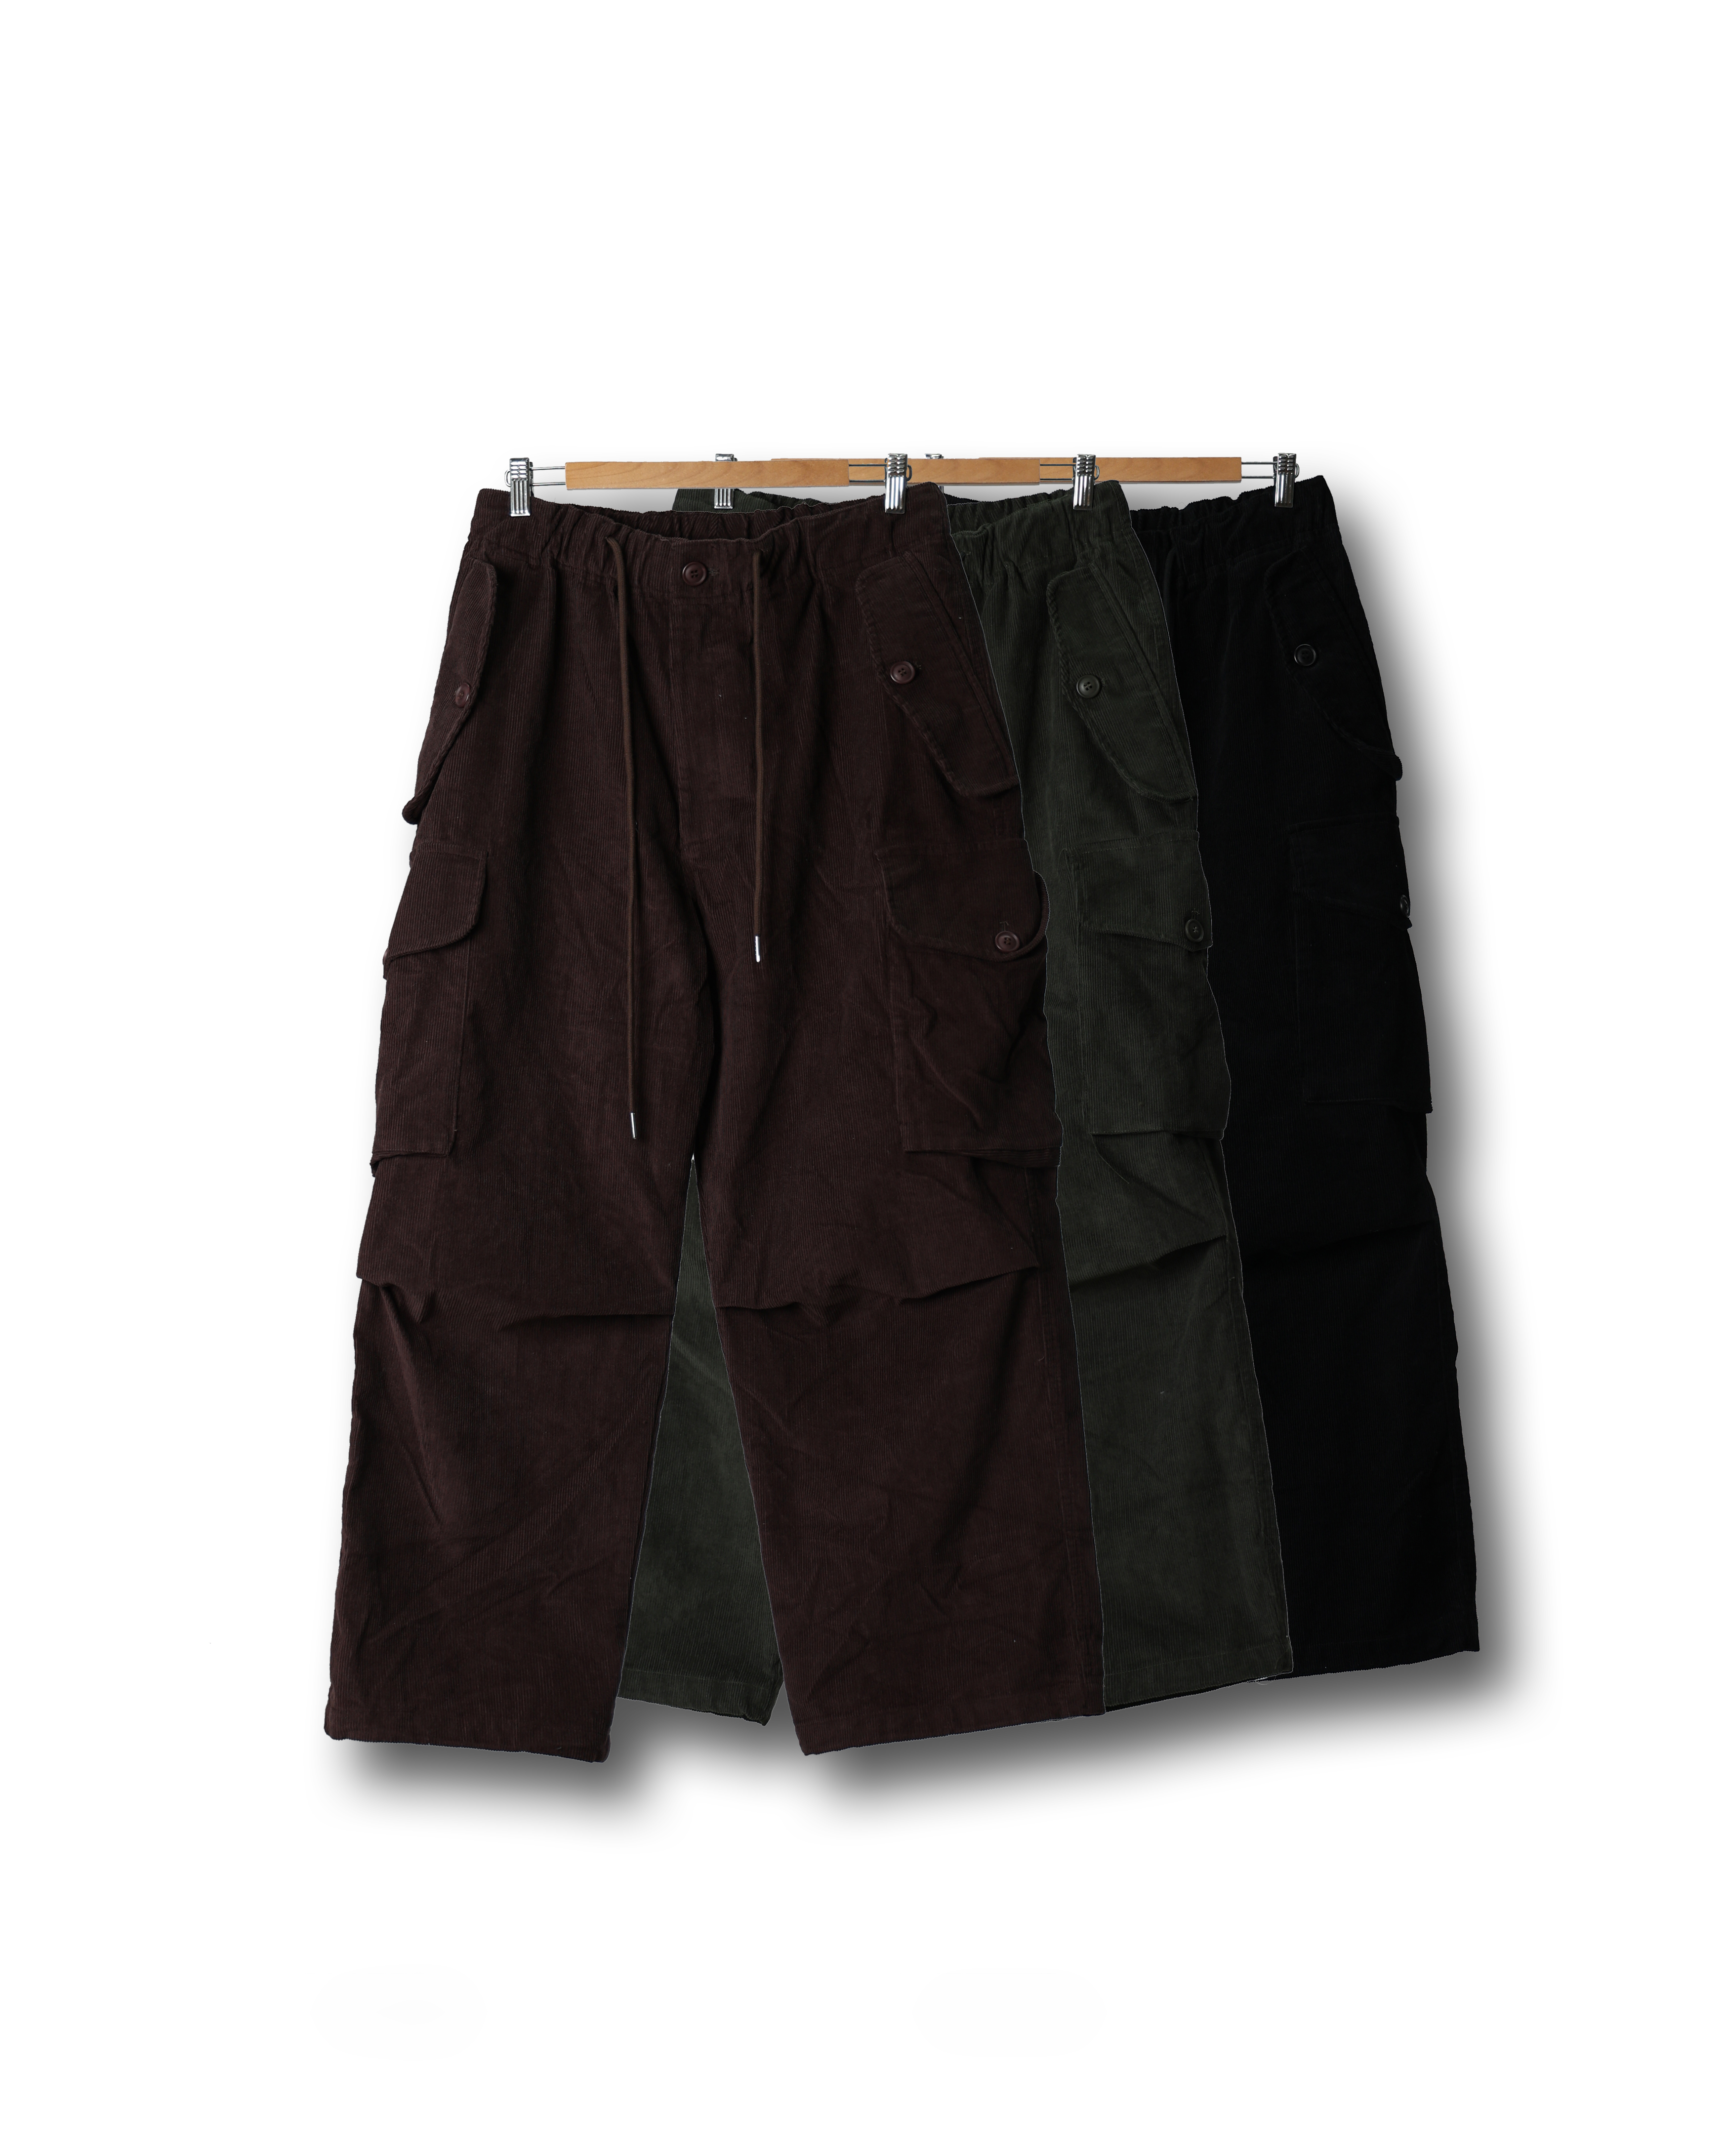 EXPRESS END Corduroy Mil Cargo Pants (Black/Olive/Brown)